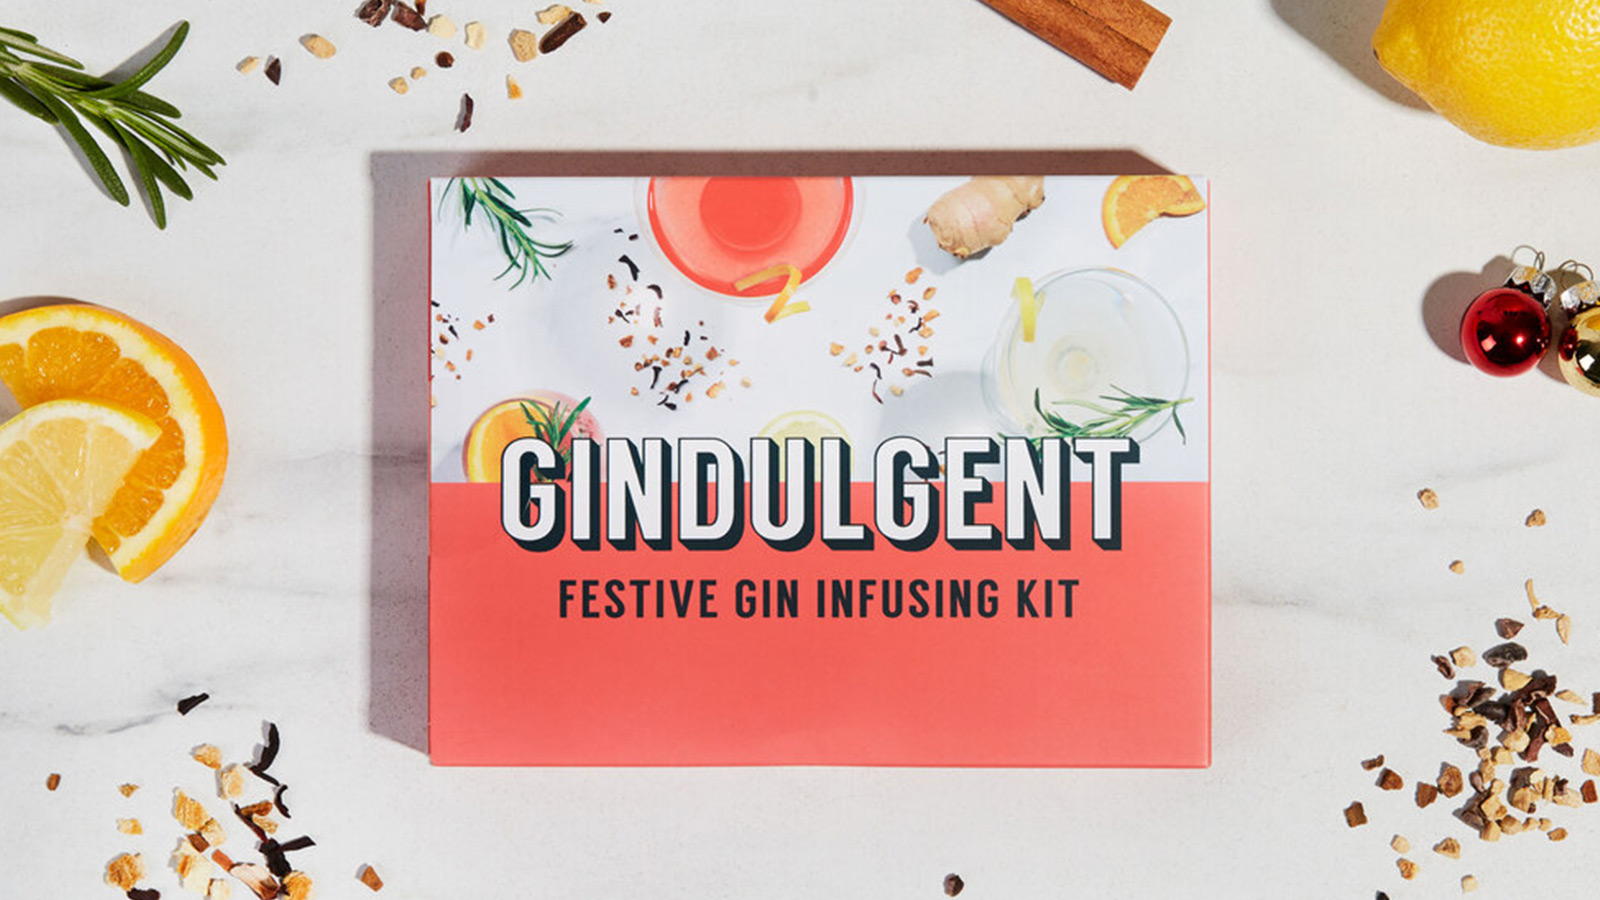 Festive Gindulgent Gin Infusing Kit